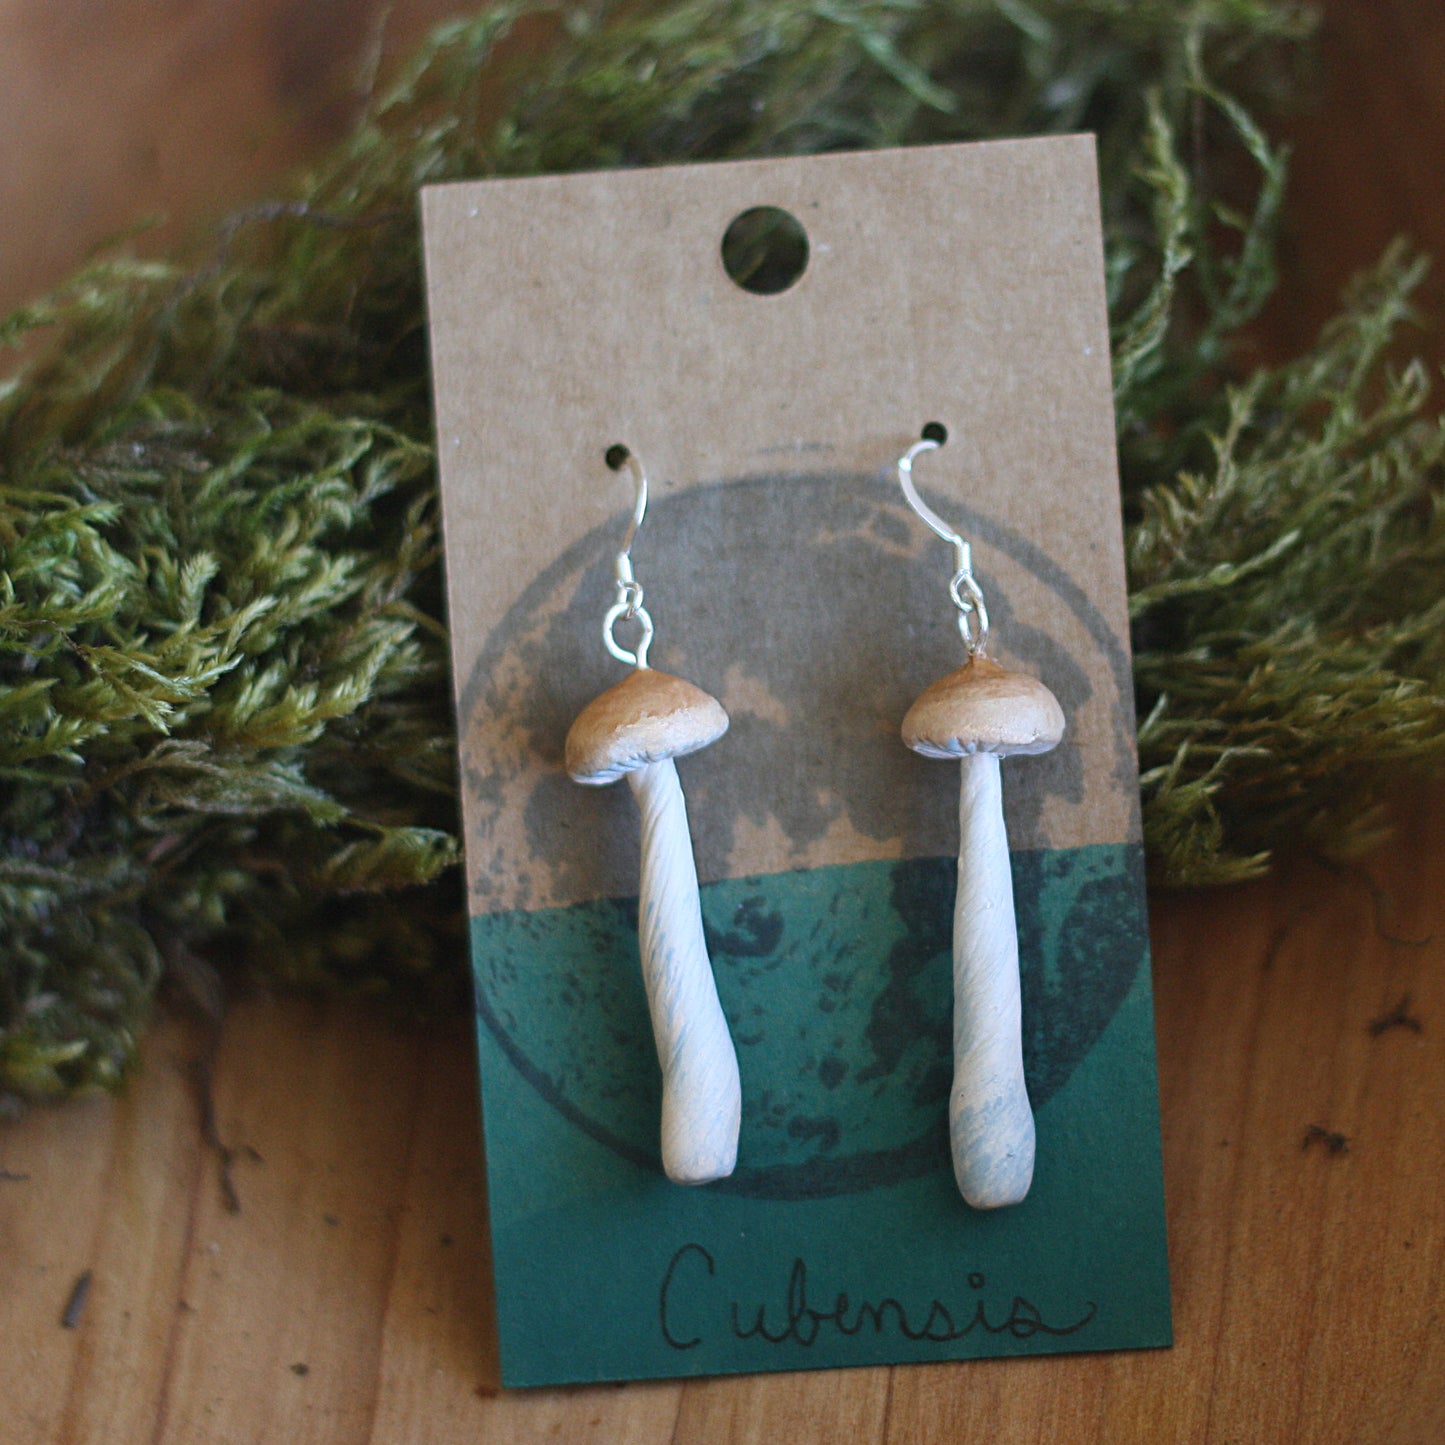 Cubensis Mushroom Earrings